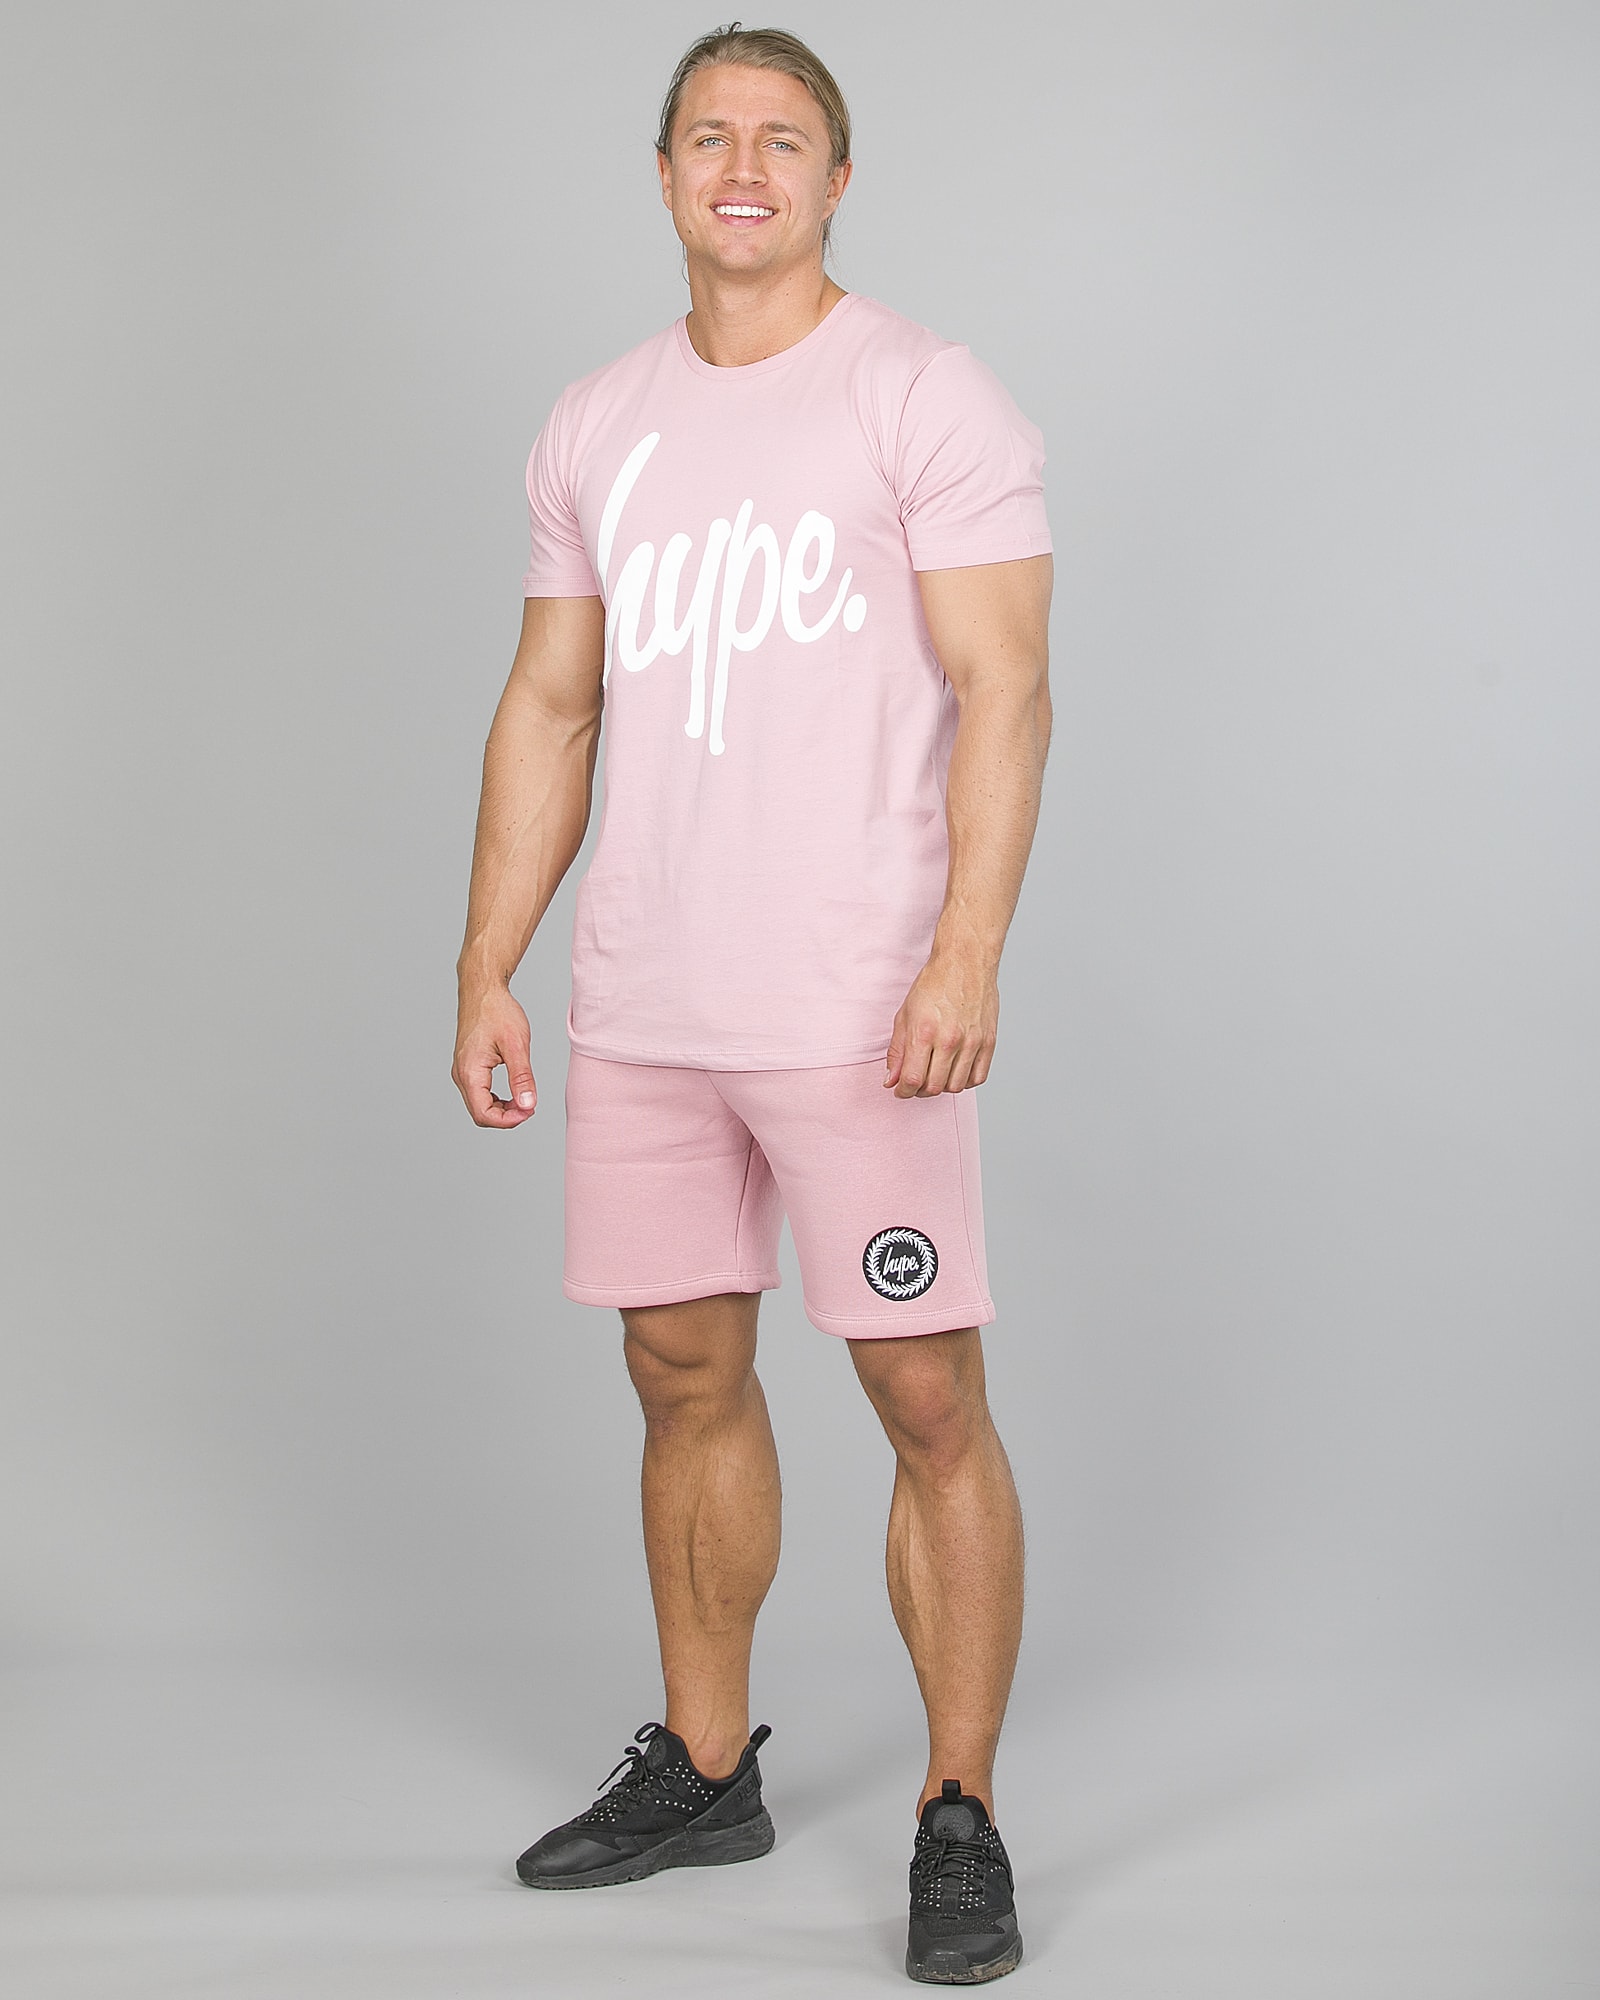 Hype Script T-Shirt Men ss18004 Pink and Crest Shorts ss18330 Pink b